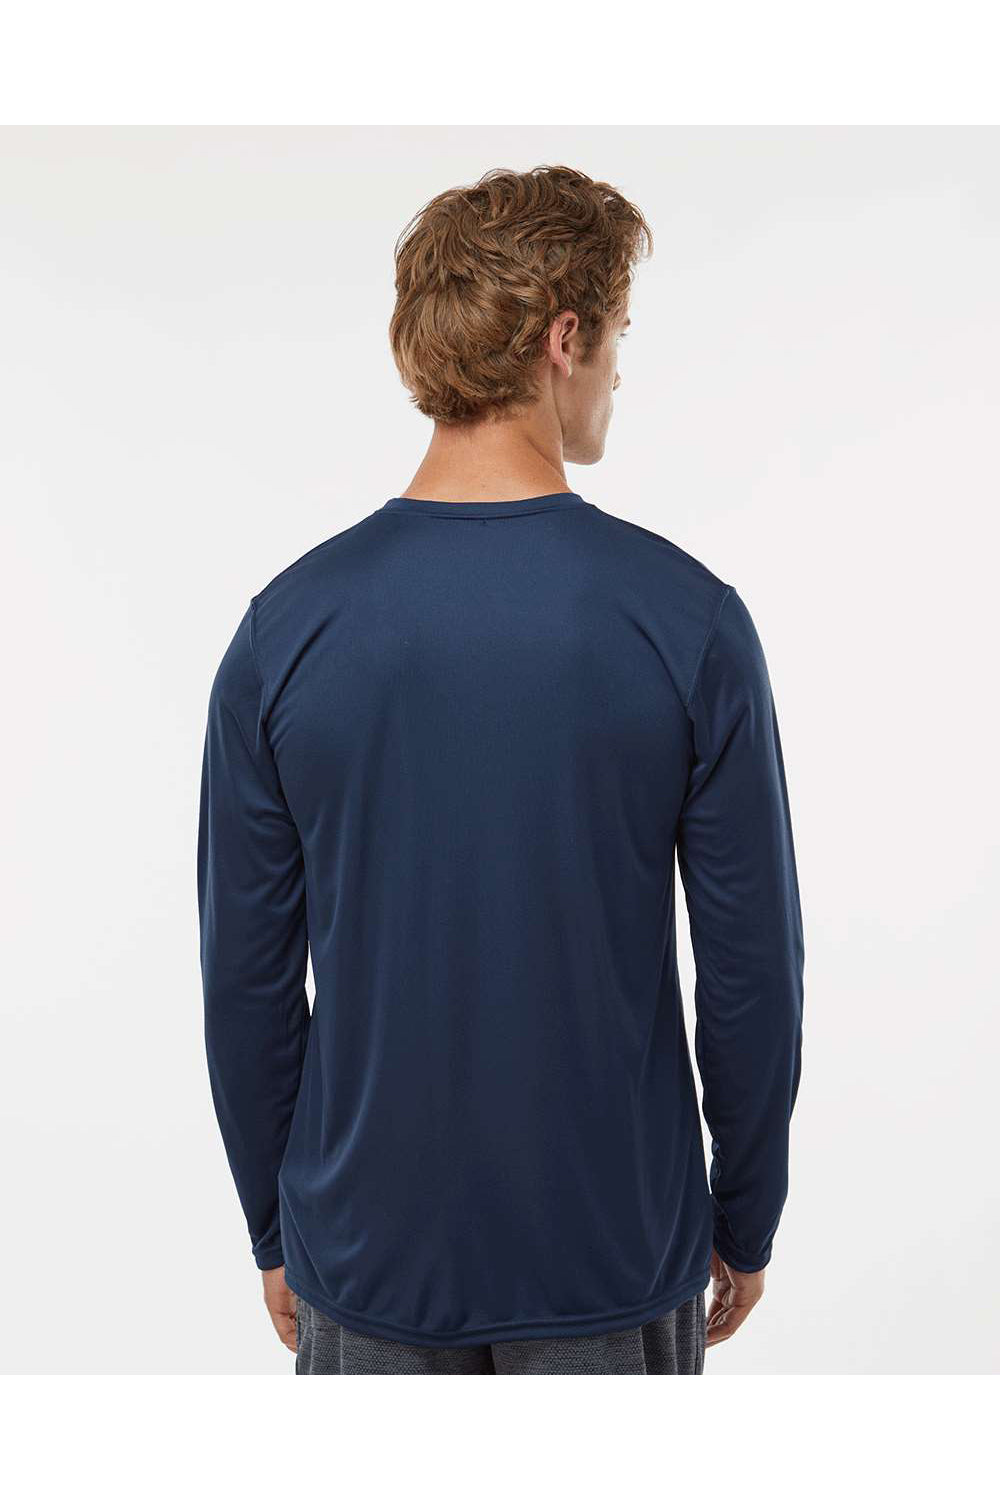 Holloway 222822 Mens Momentum Long Sleeve Crewneck T-Shirt Navy Blue Model Back